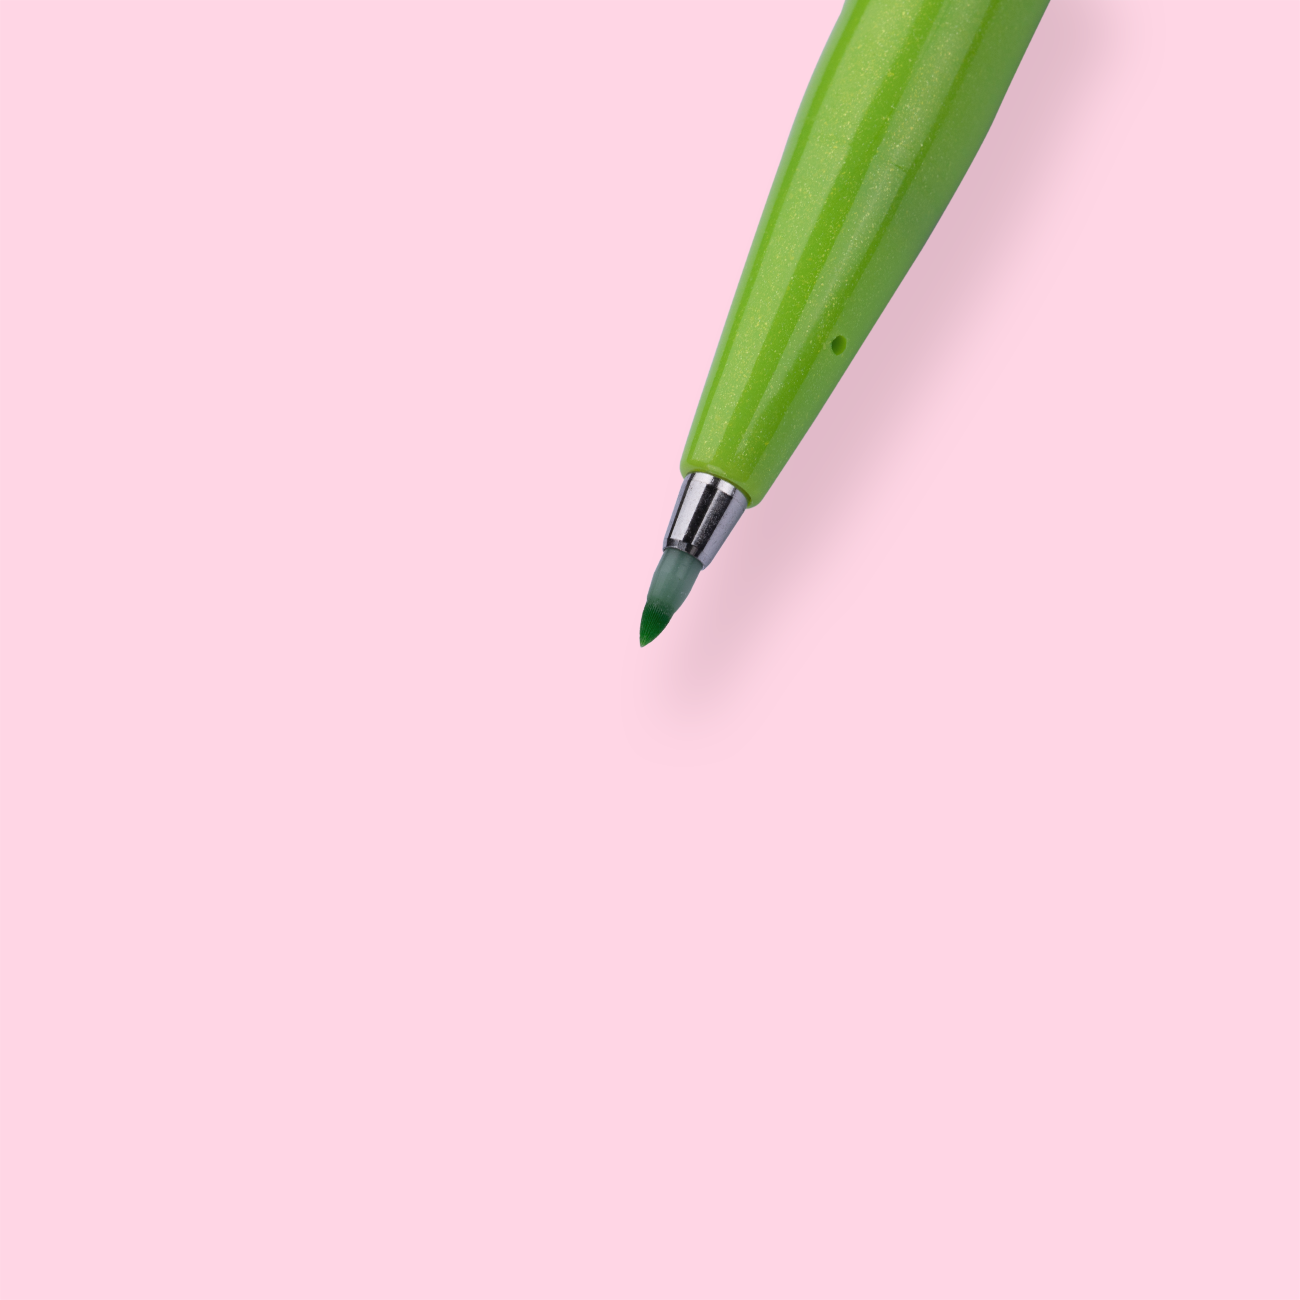 Color Scheme Pen Set - Rainwashed Green Grape